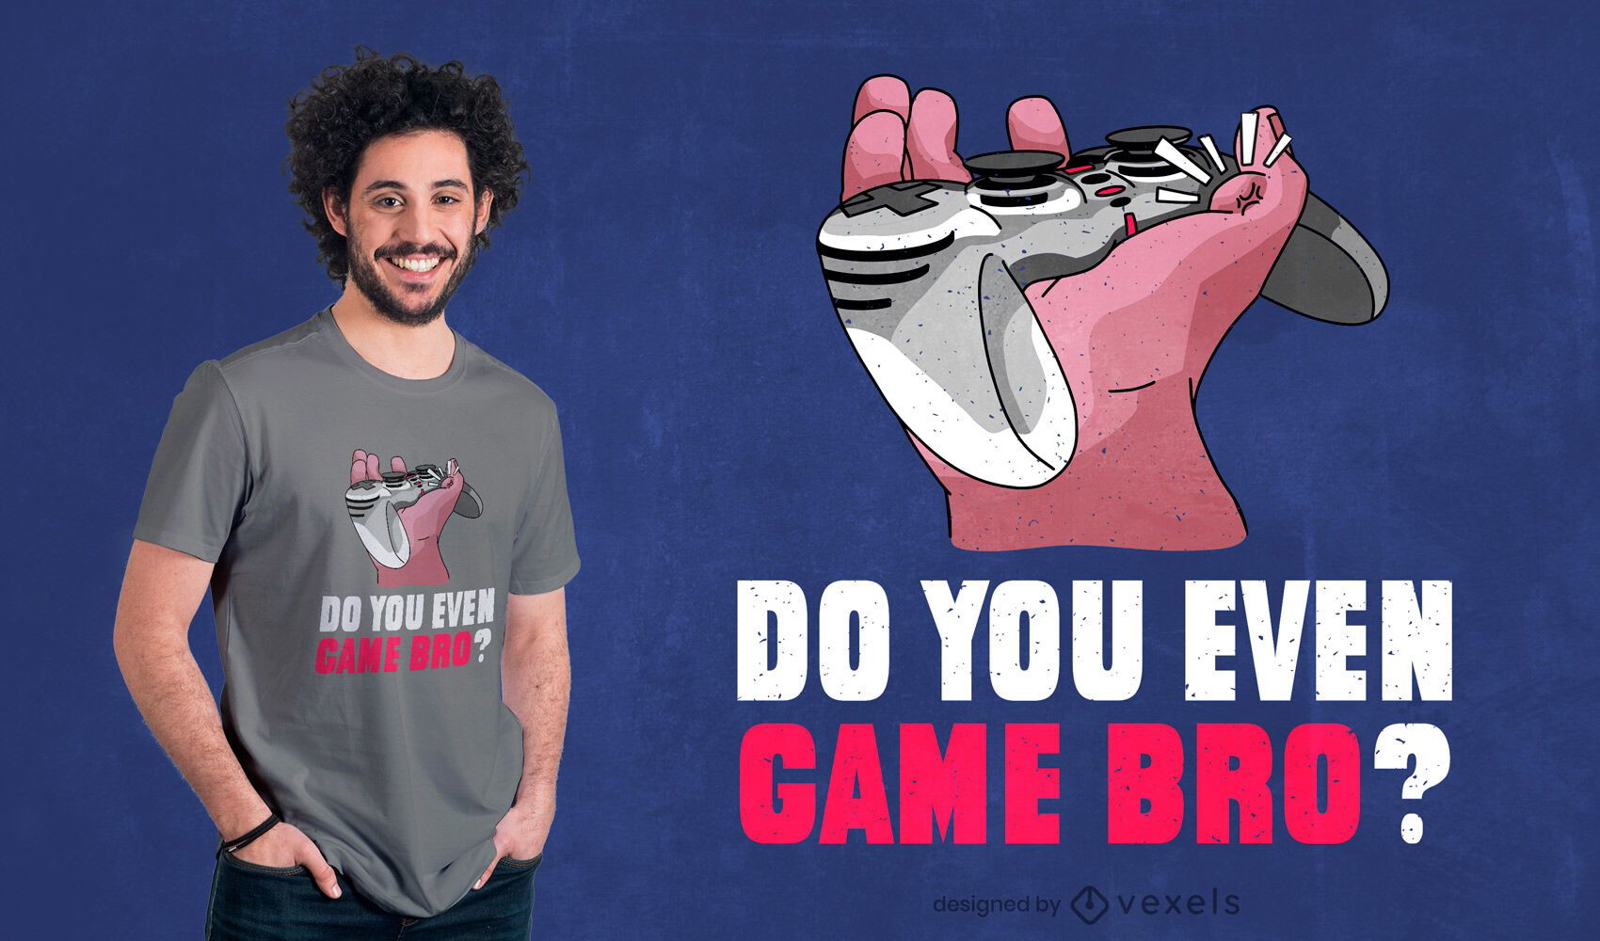 Gamer bro t-shirt design